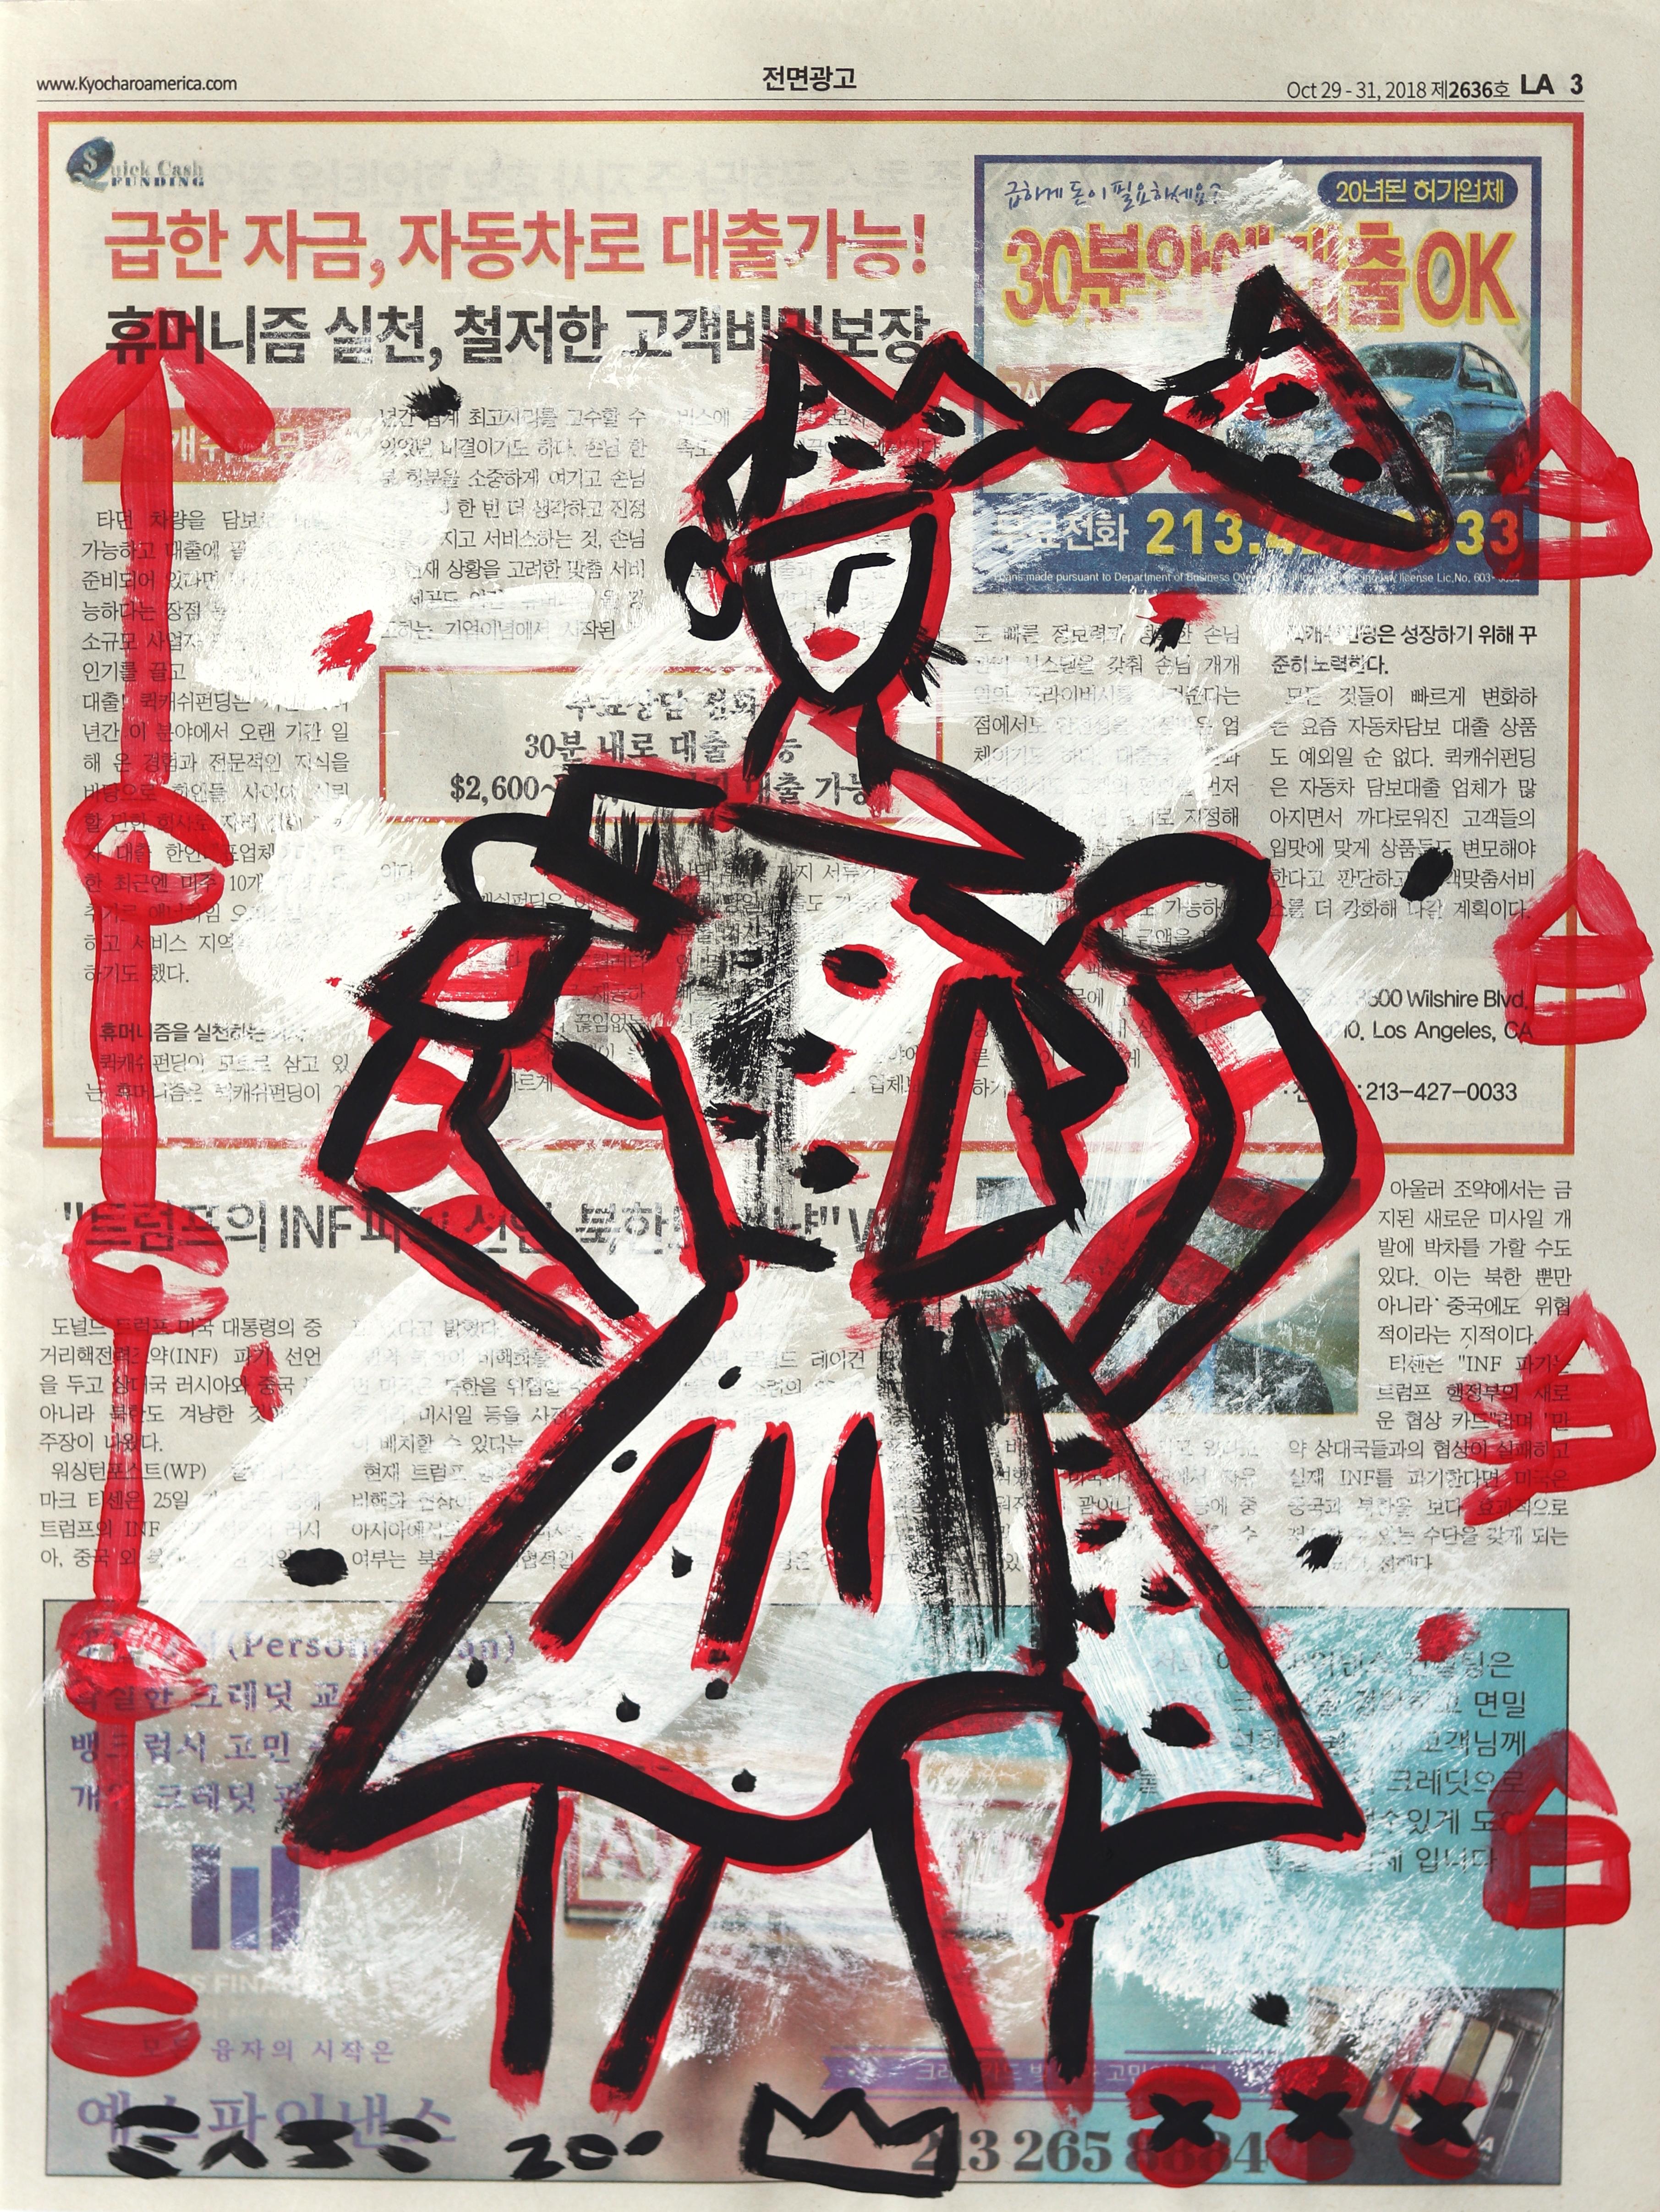 Fashionista - Original Black and Red Street Art on Newsprint